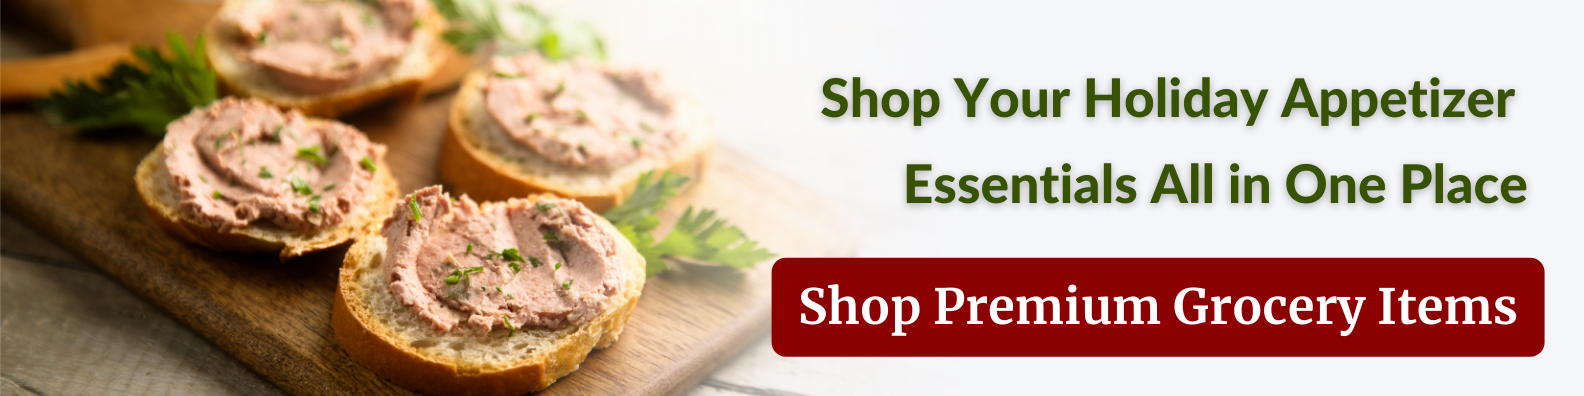 shop premium grocery items